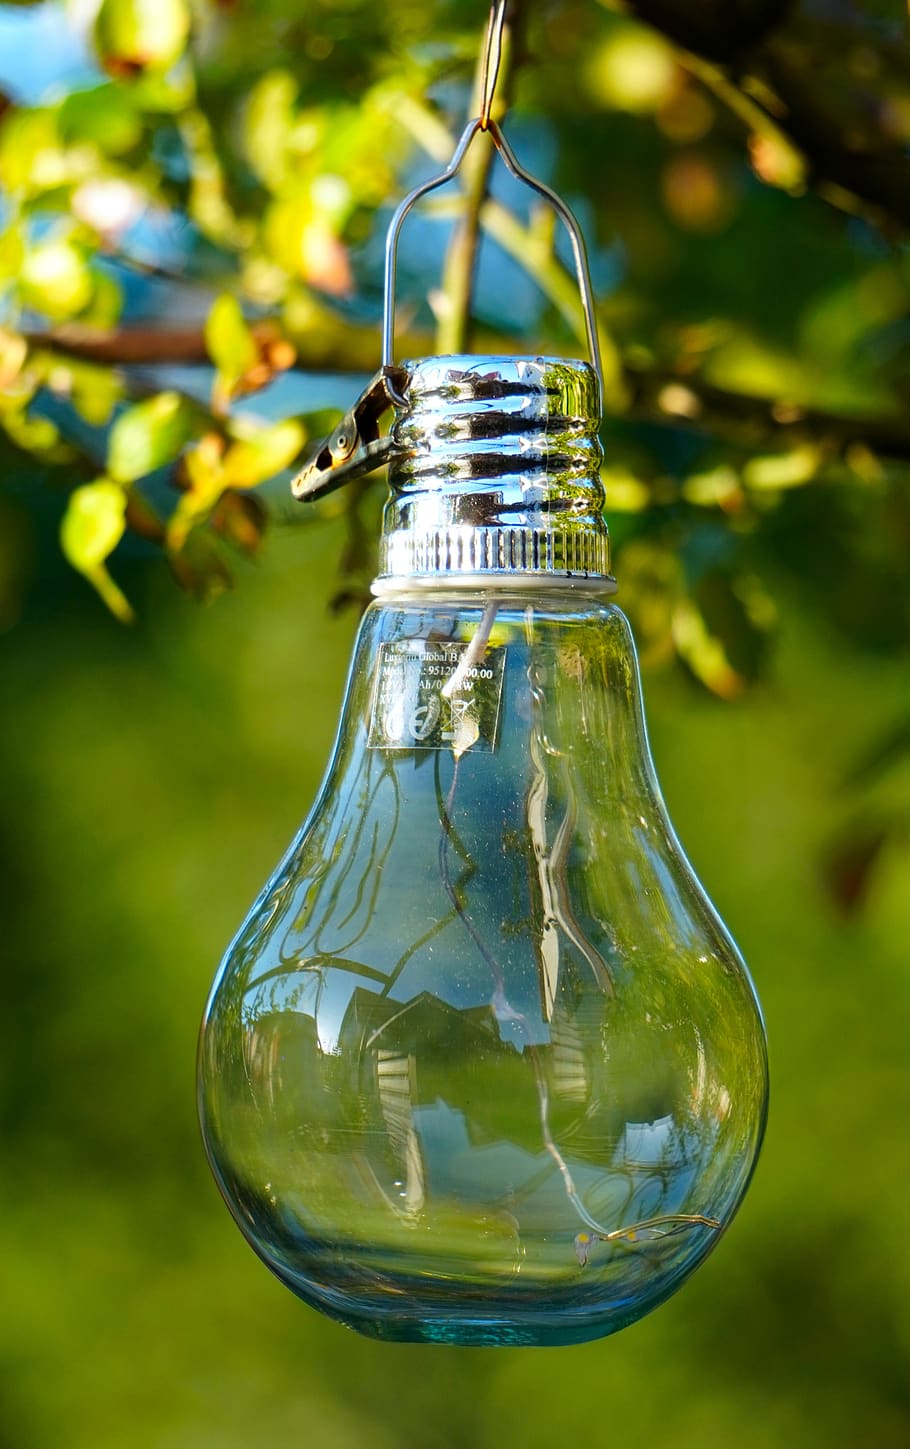 lâmpada, luz de jardim, solar, gartendeko, foco no primeiro plano, transparente, vidro - material, recipiente, dia, garrafa